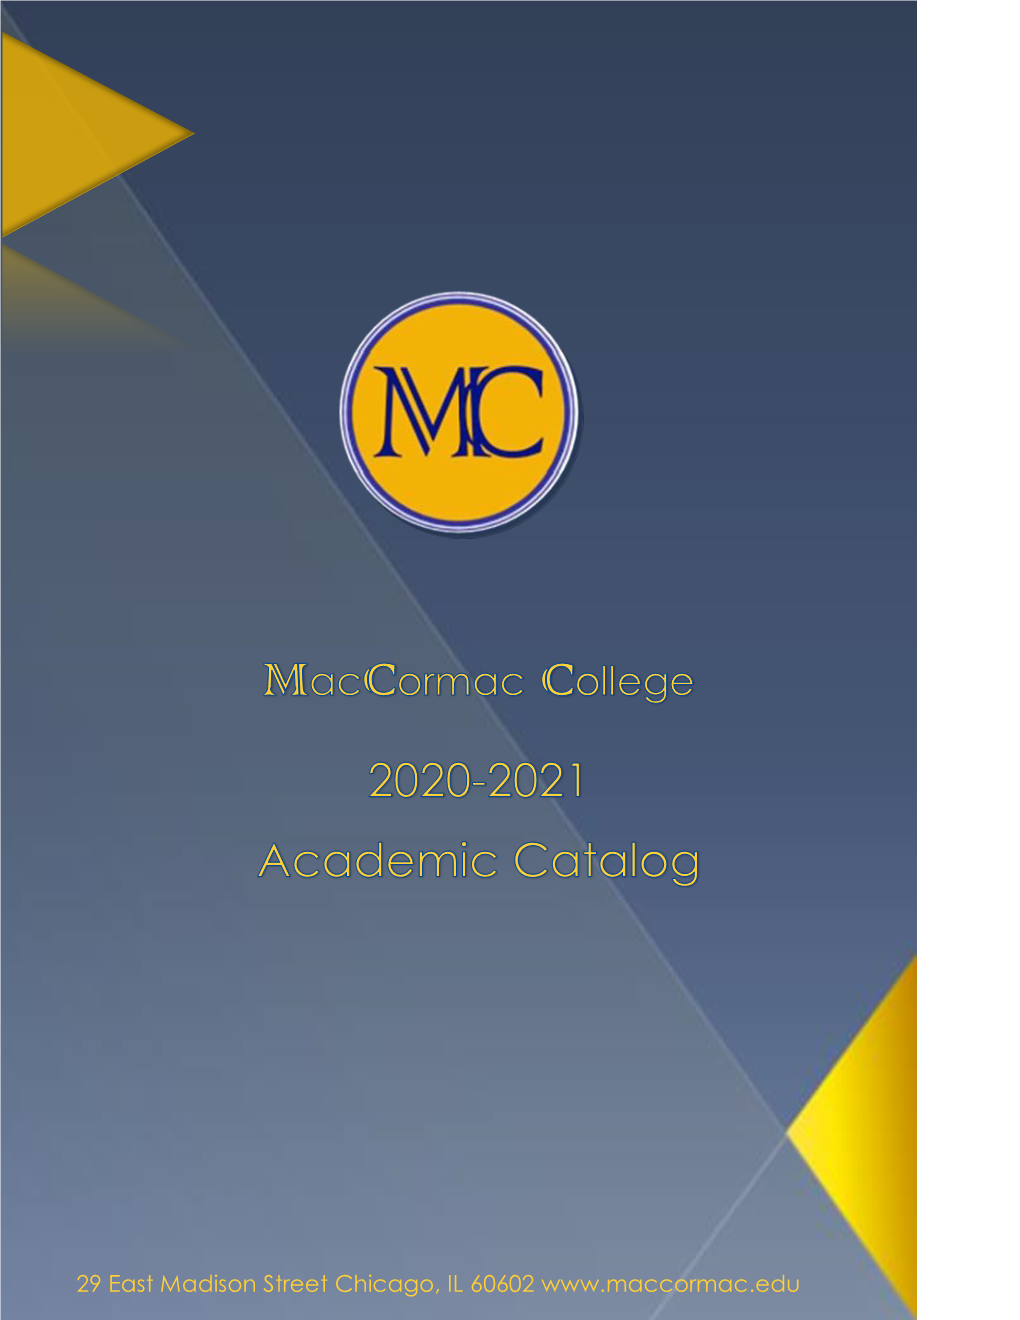 Maccormac College 2020-2021 Academic Catalog